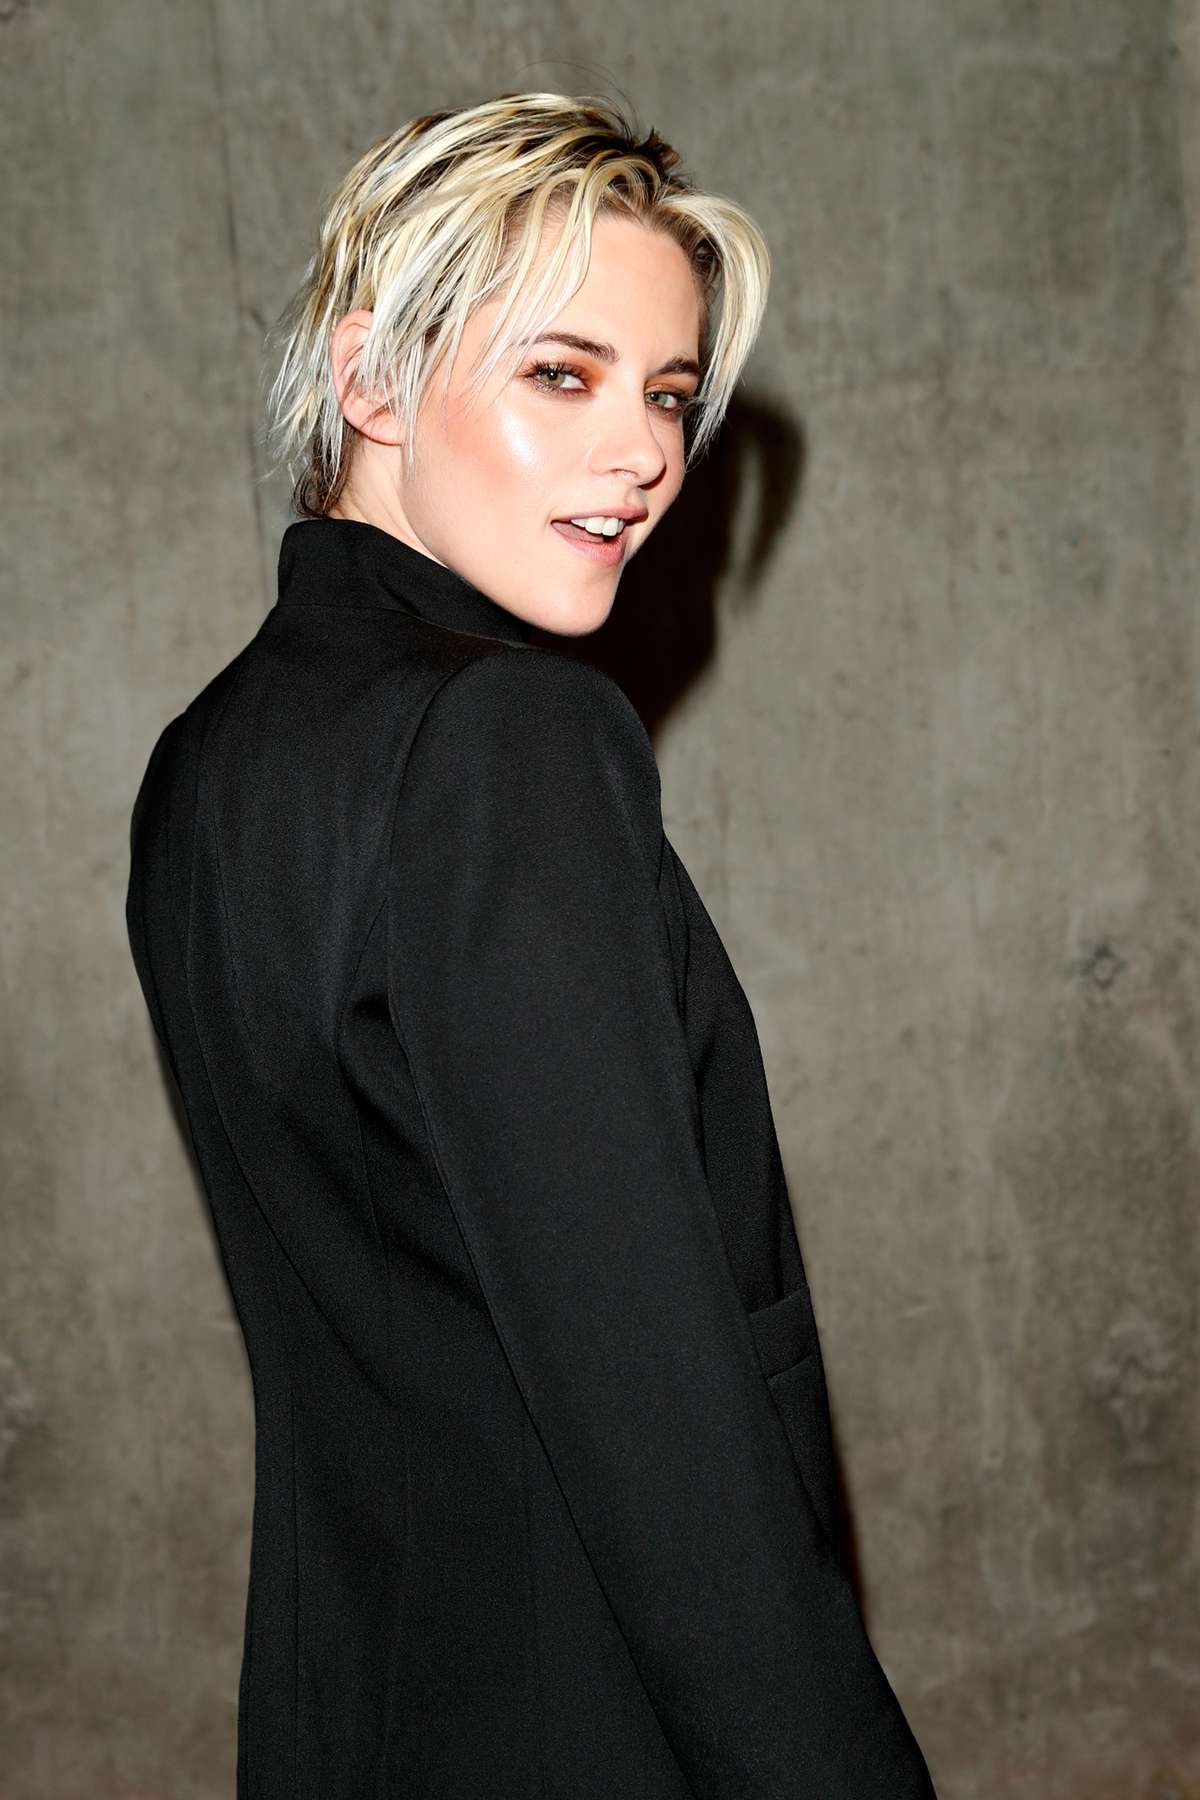 NEWS: Kristen Stewart Debuts Strawberry Blonde Hair at the Venice Film Festival